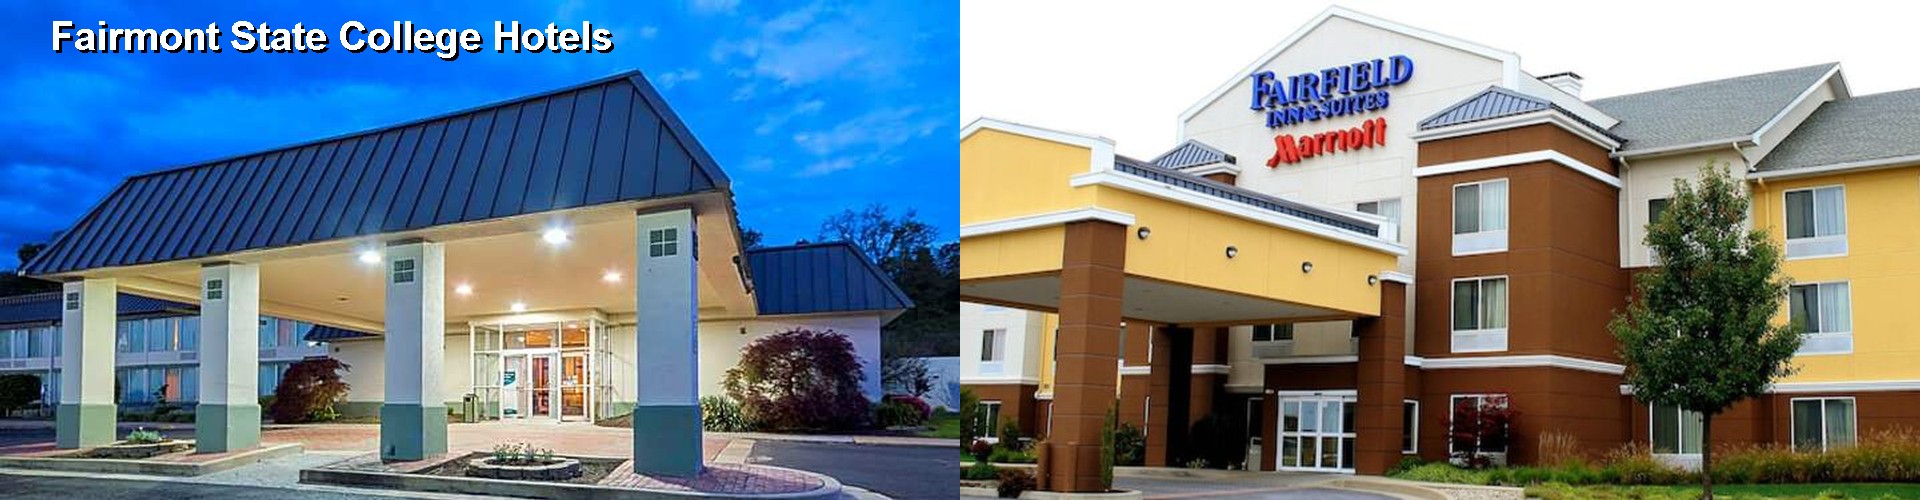 5 Best Hotels near Fairmont State College